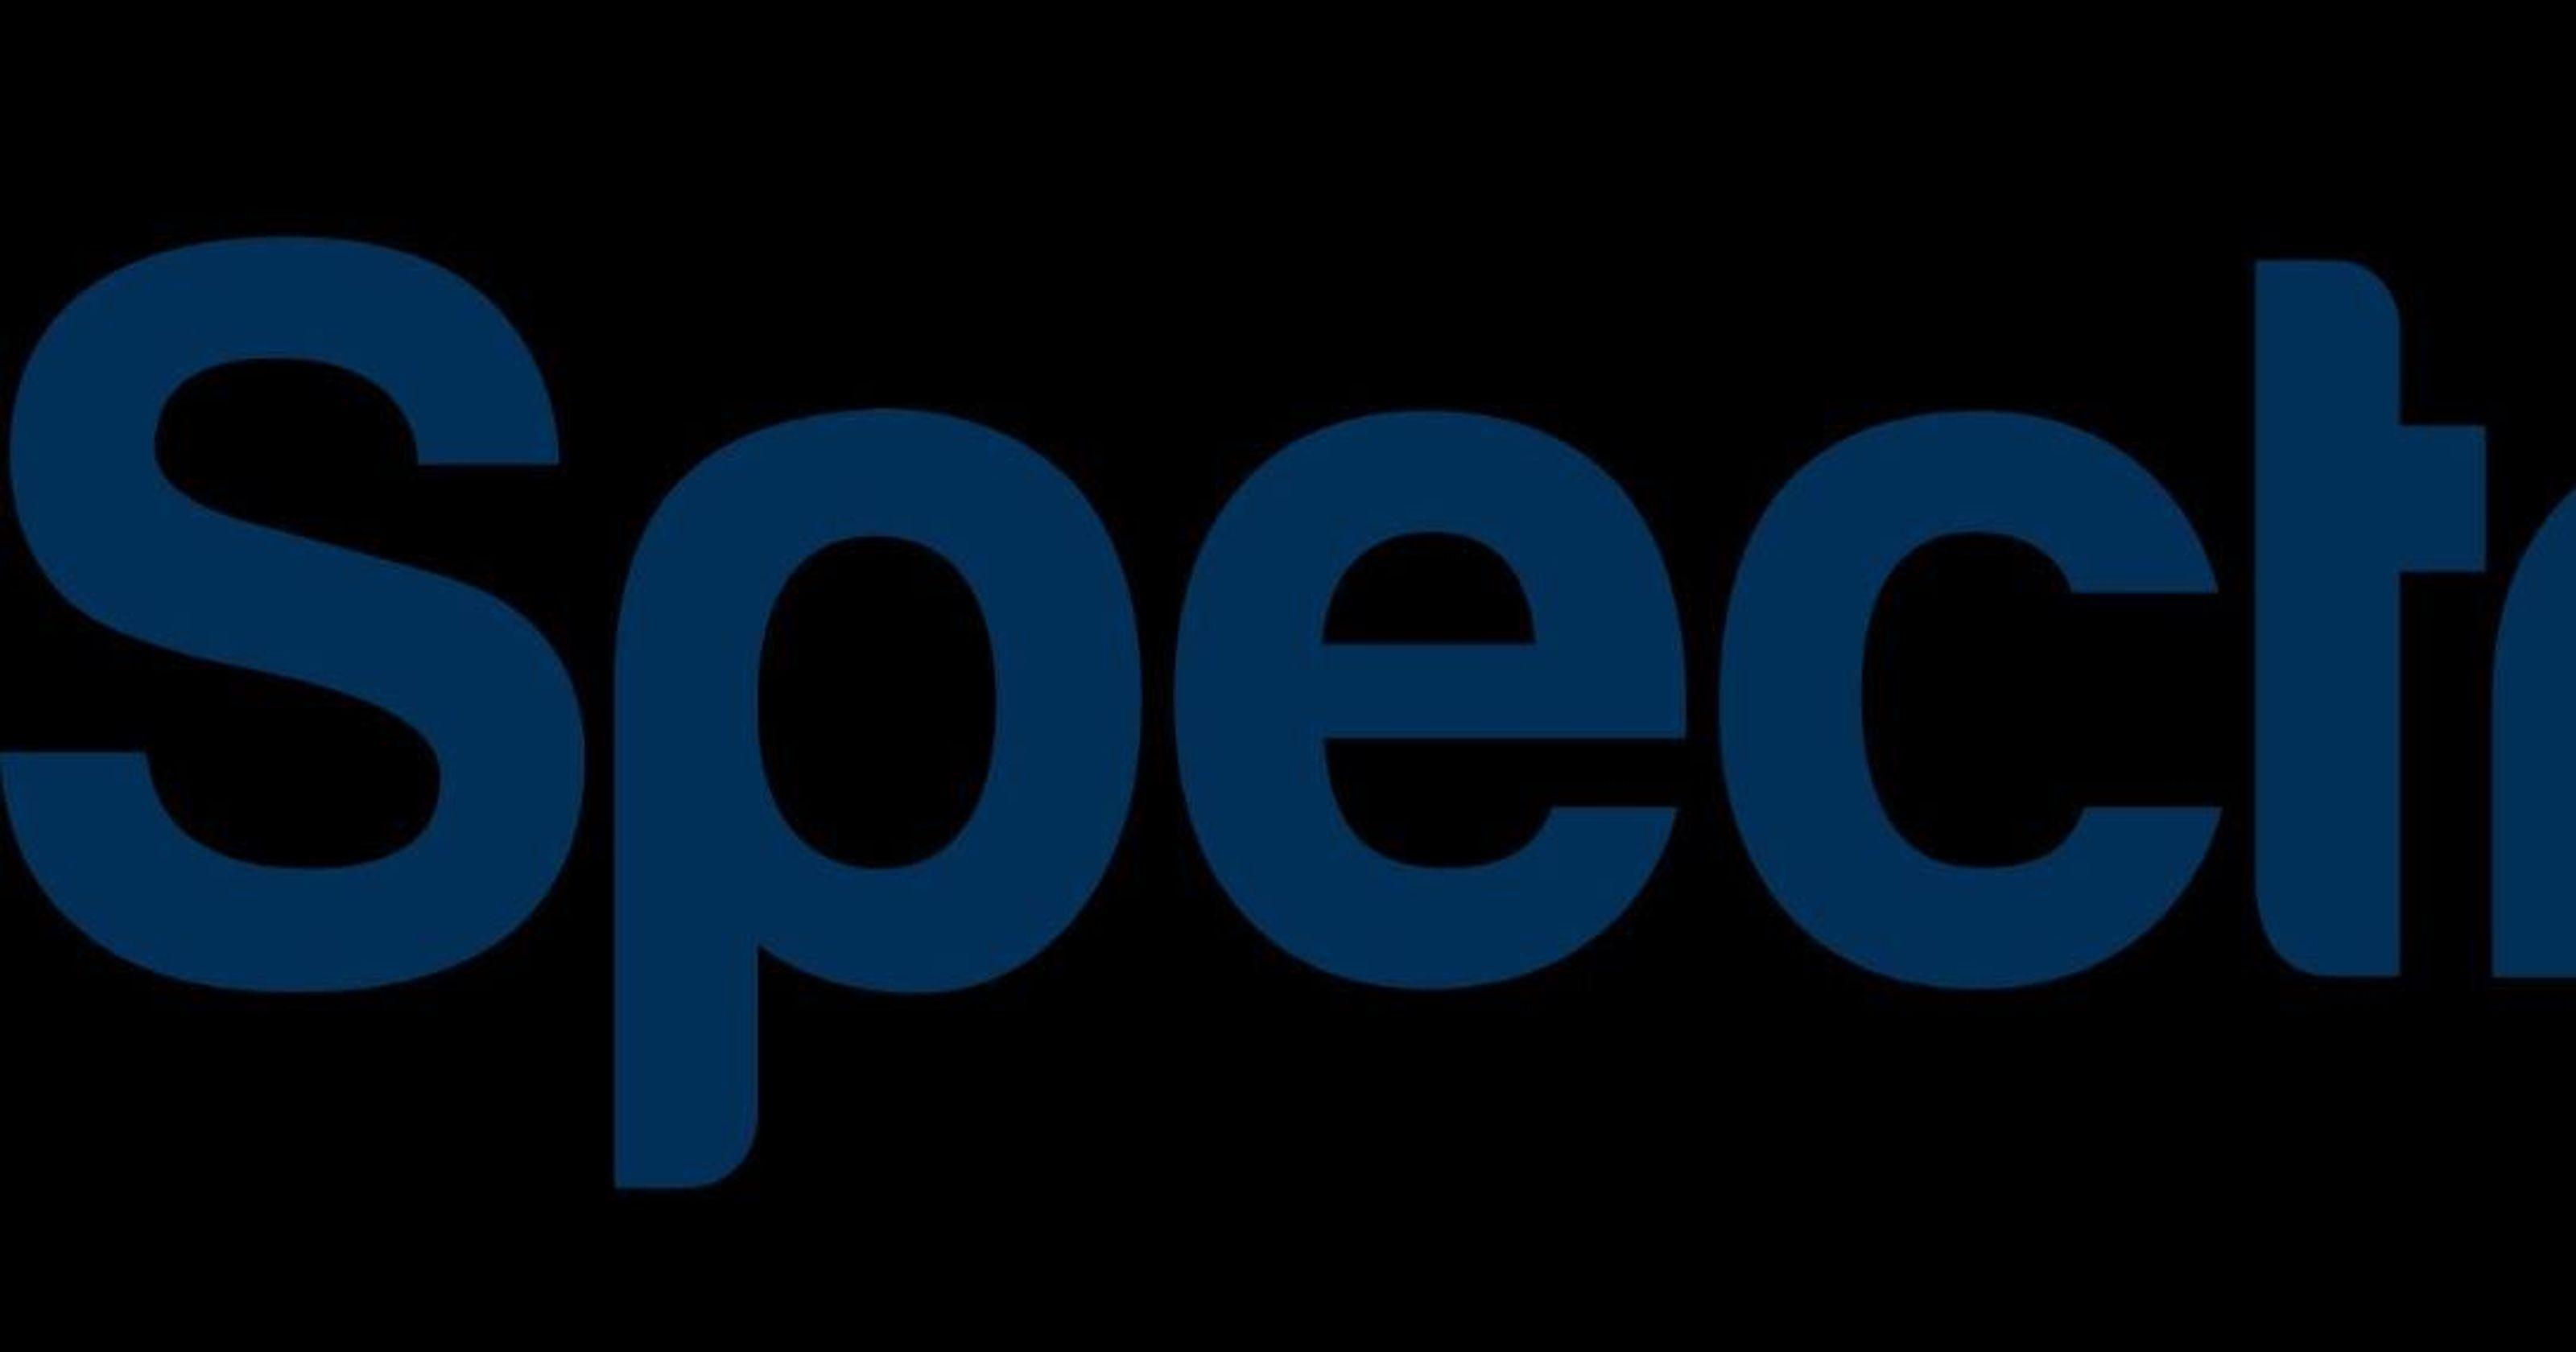 Spectrum TV Logo - Charter will hike Spectrum TV, internet rates in November